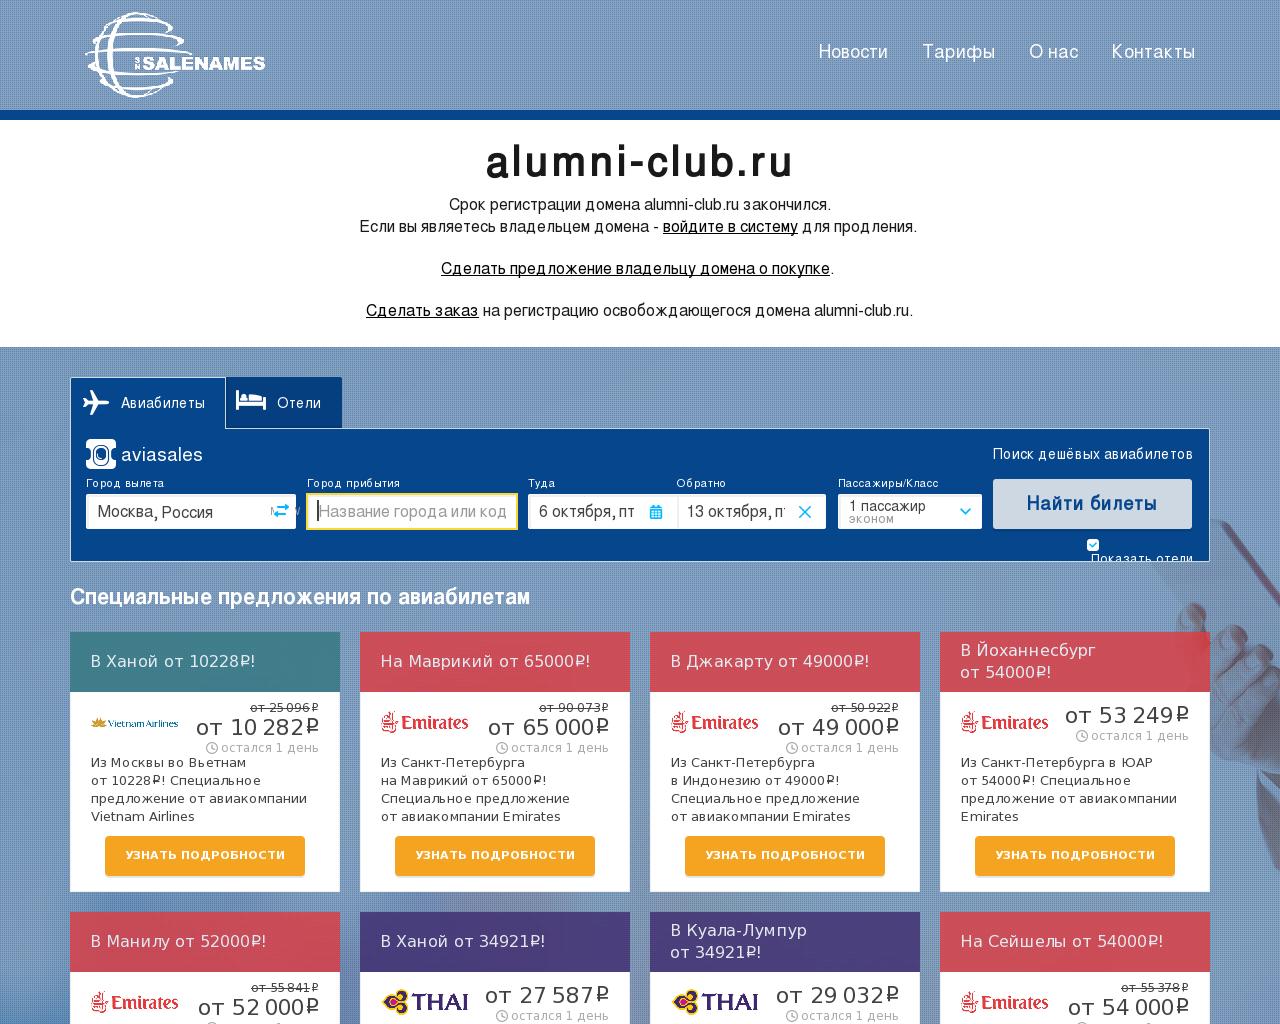 Изображение сайта alumni-club.ru в разрешении 1280x1024